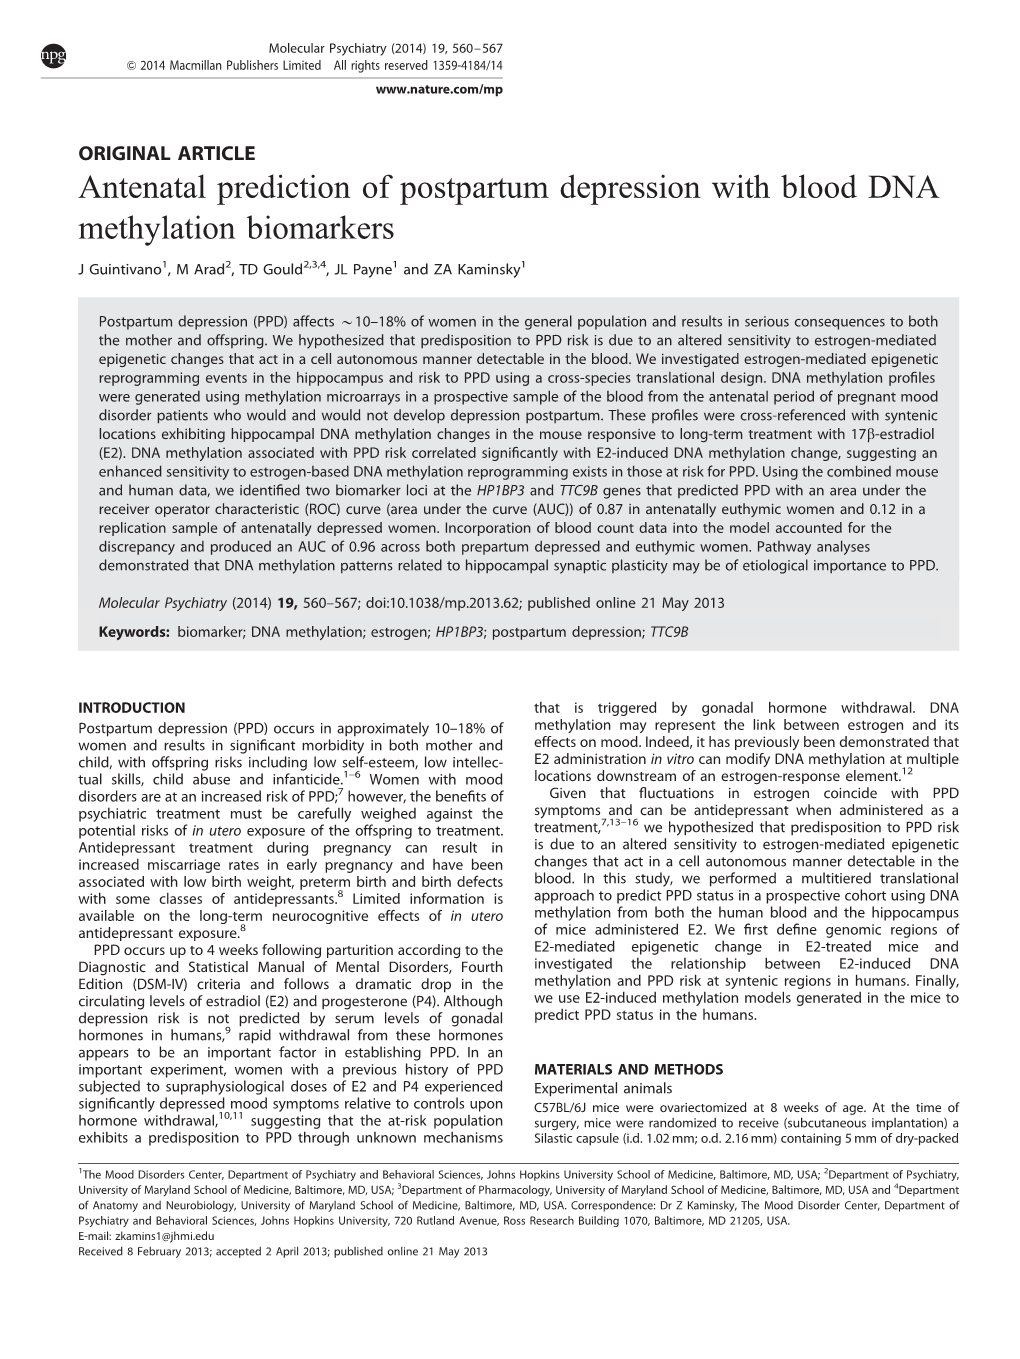 Antenatal Prediction of Postpartum Depression with Blood DNA Methylation Biomarkers